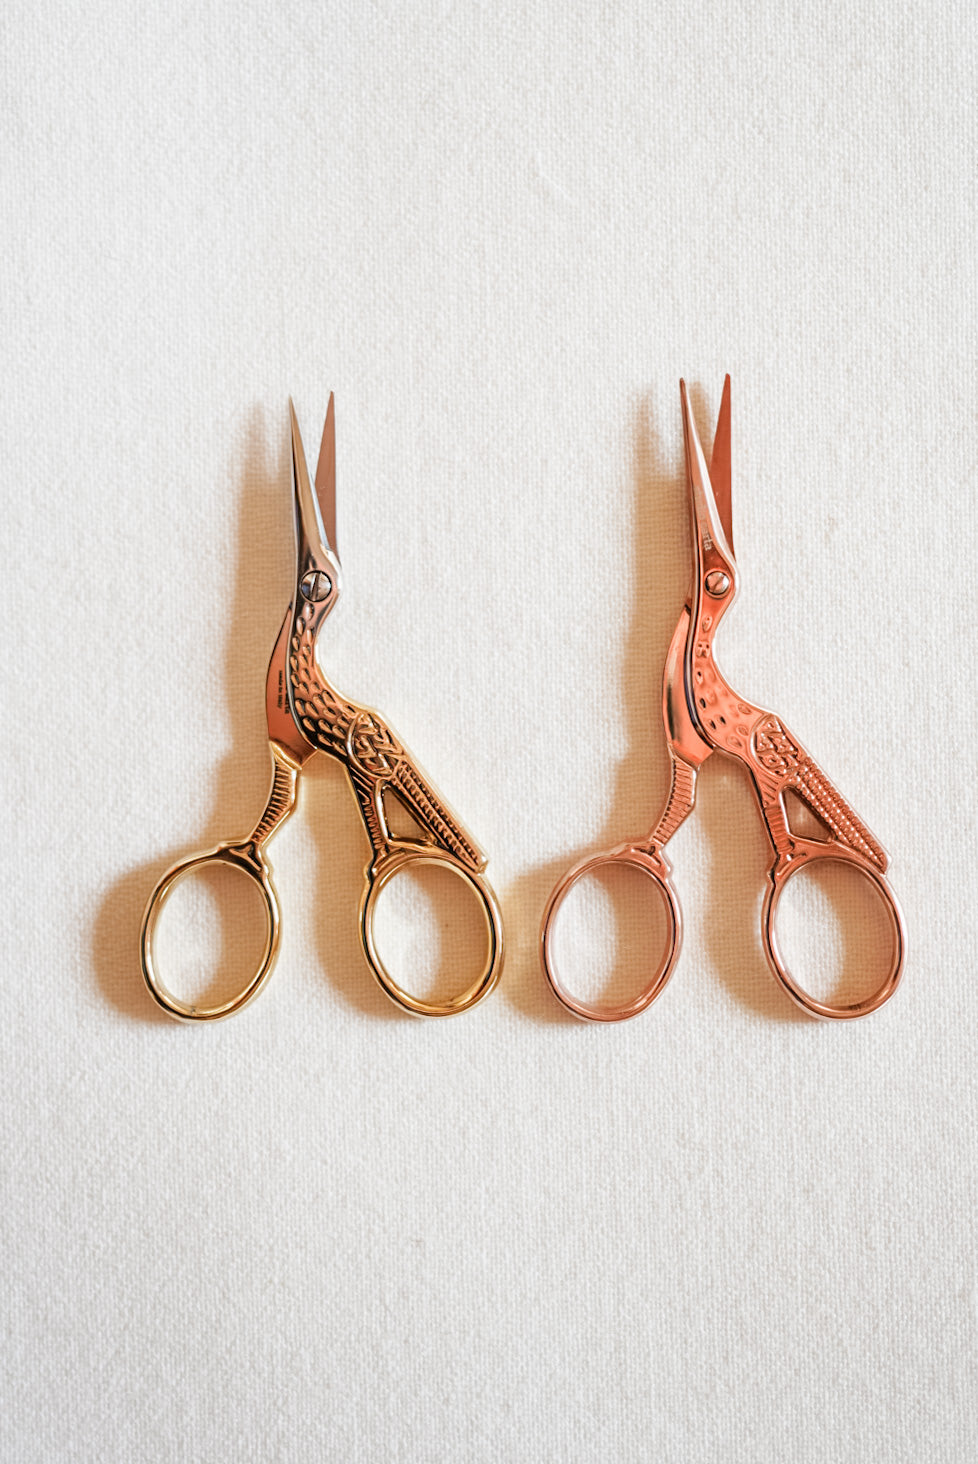 Silver Crane Scissors Stork Scissors Thread Snips for Sewing Kits 